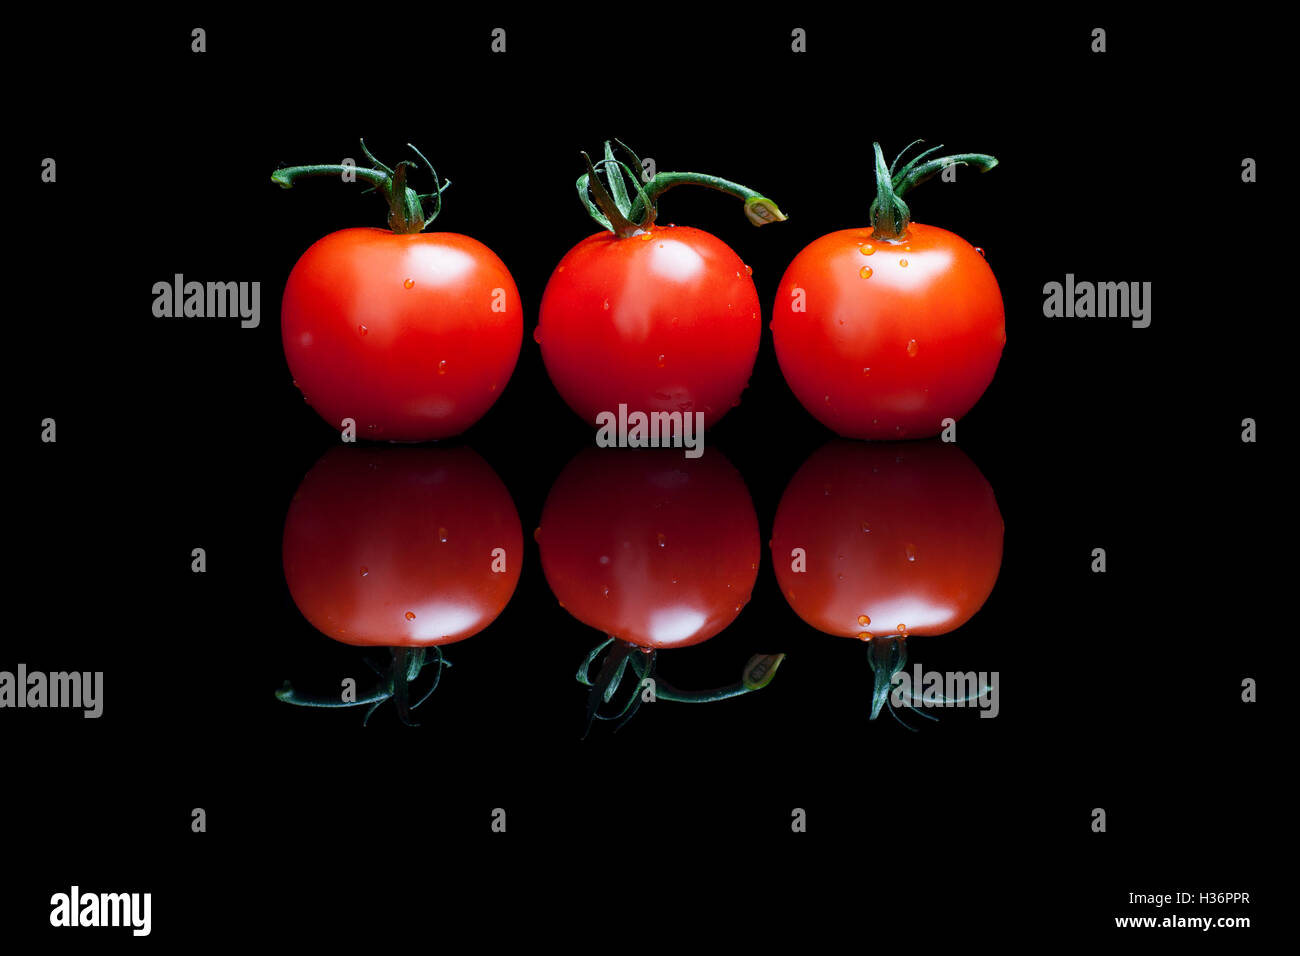 Three tomatoes on a black shiny background Stock Photo